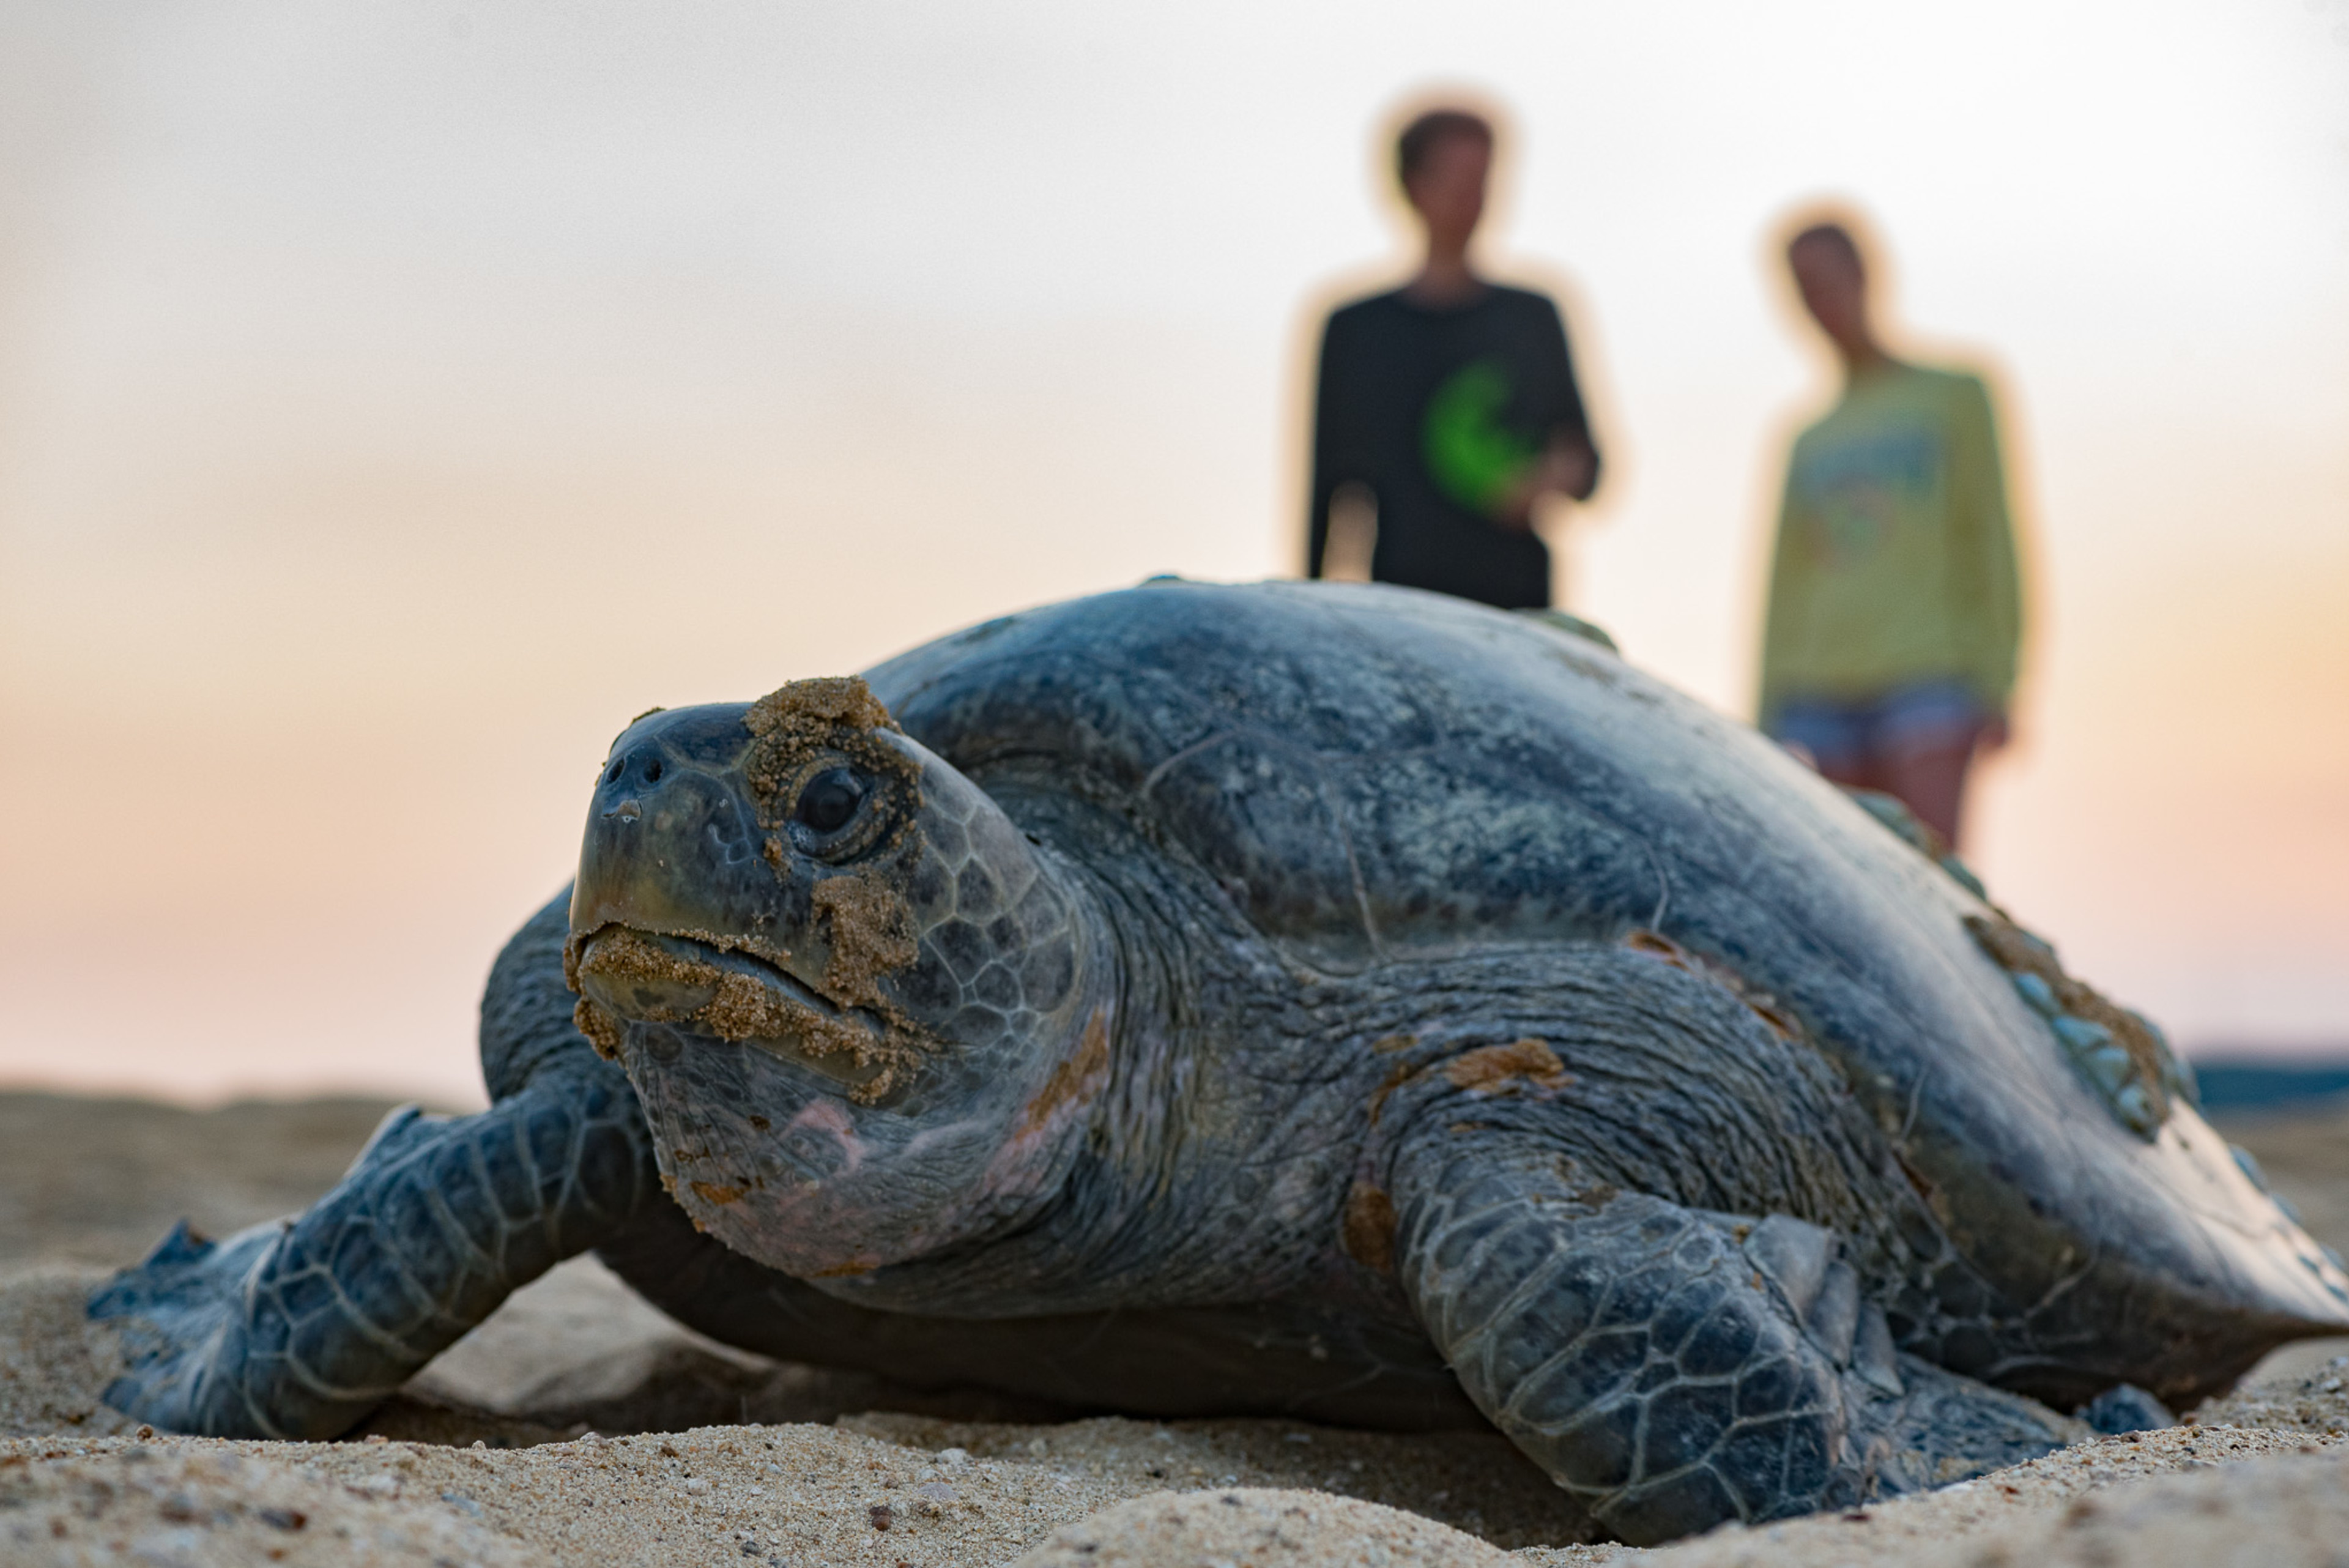 Broader benefits from turtle hatchling protection 2